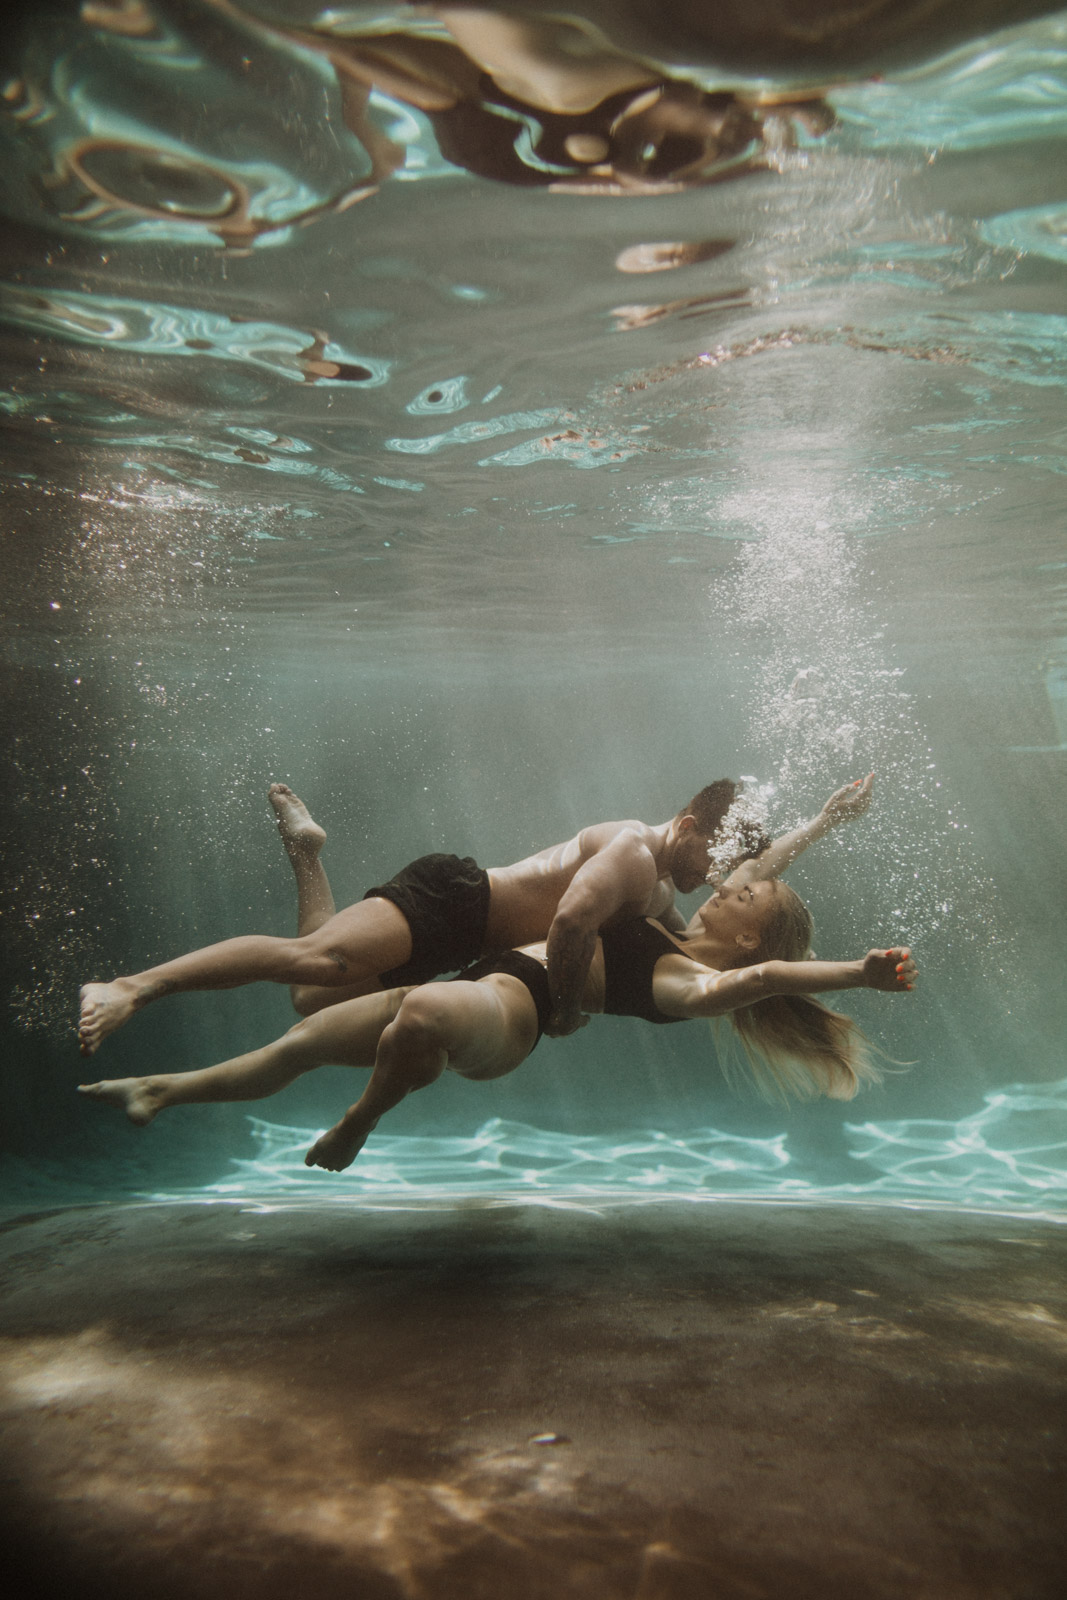 Swimming in Love by Tressa Wixom